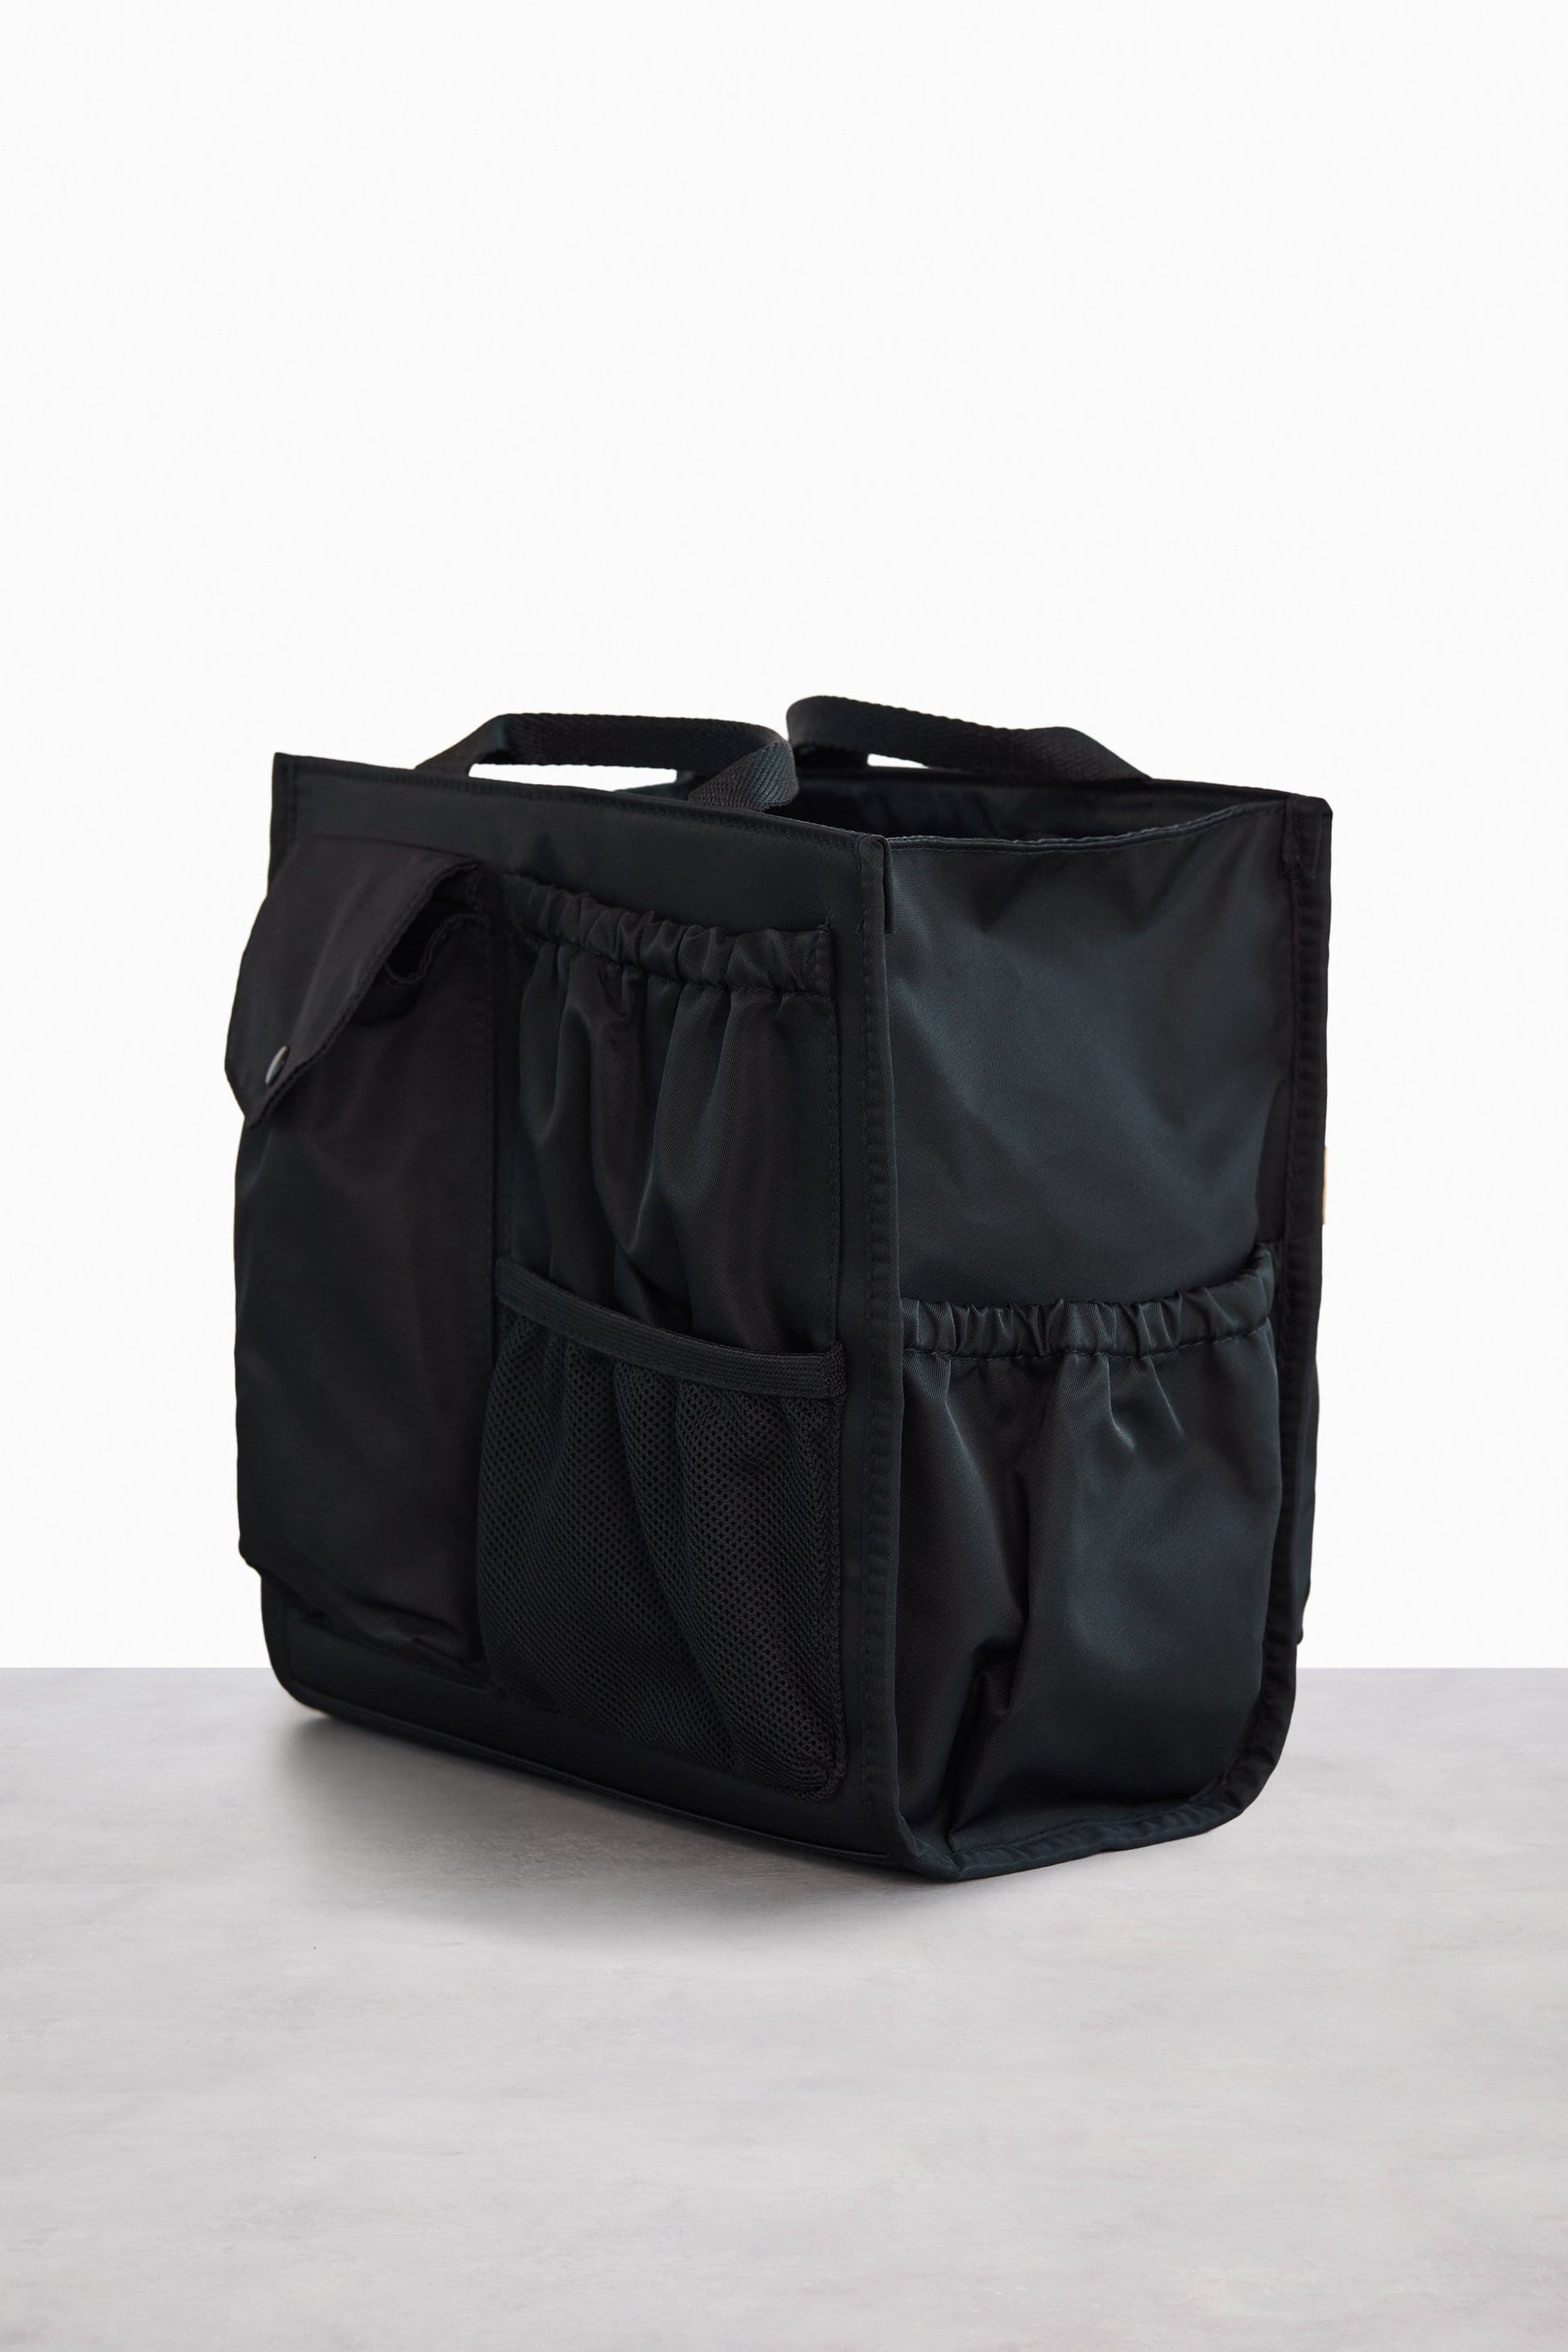 BÉIS 'The Tote Insert' in Black - Diaper Bag Insert & Organizer